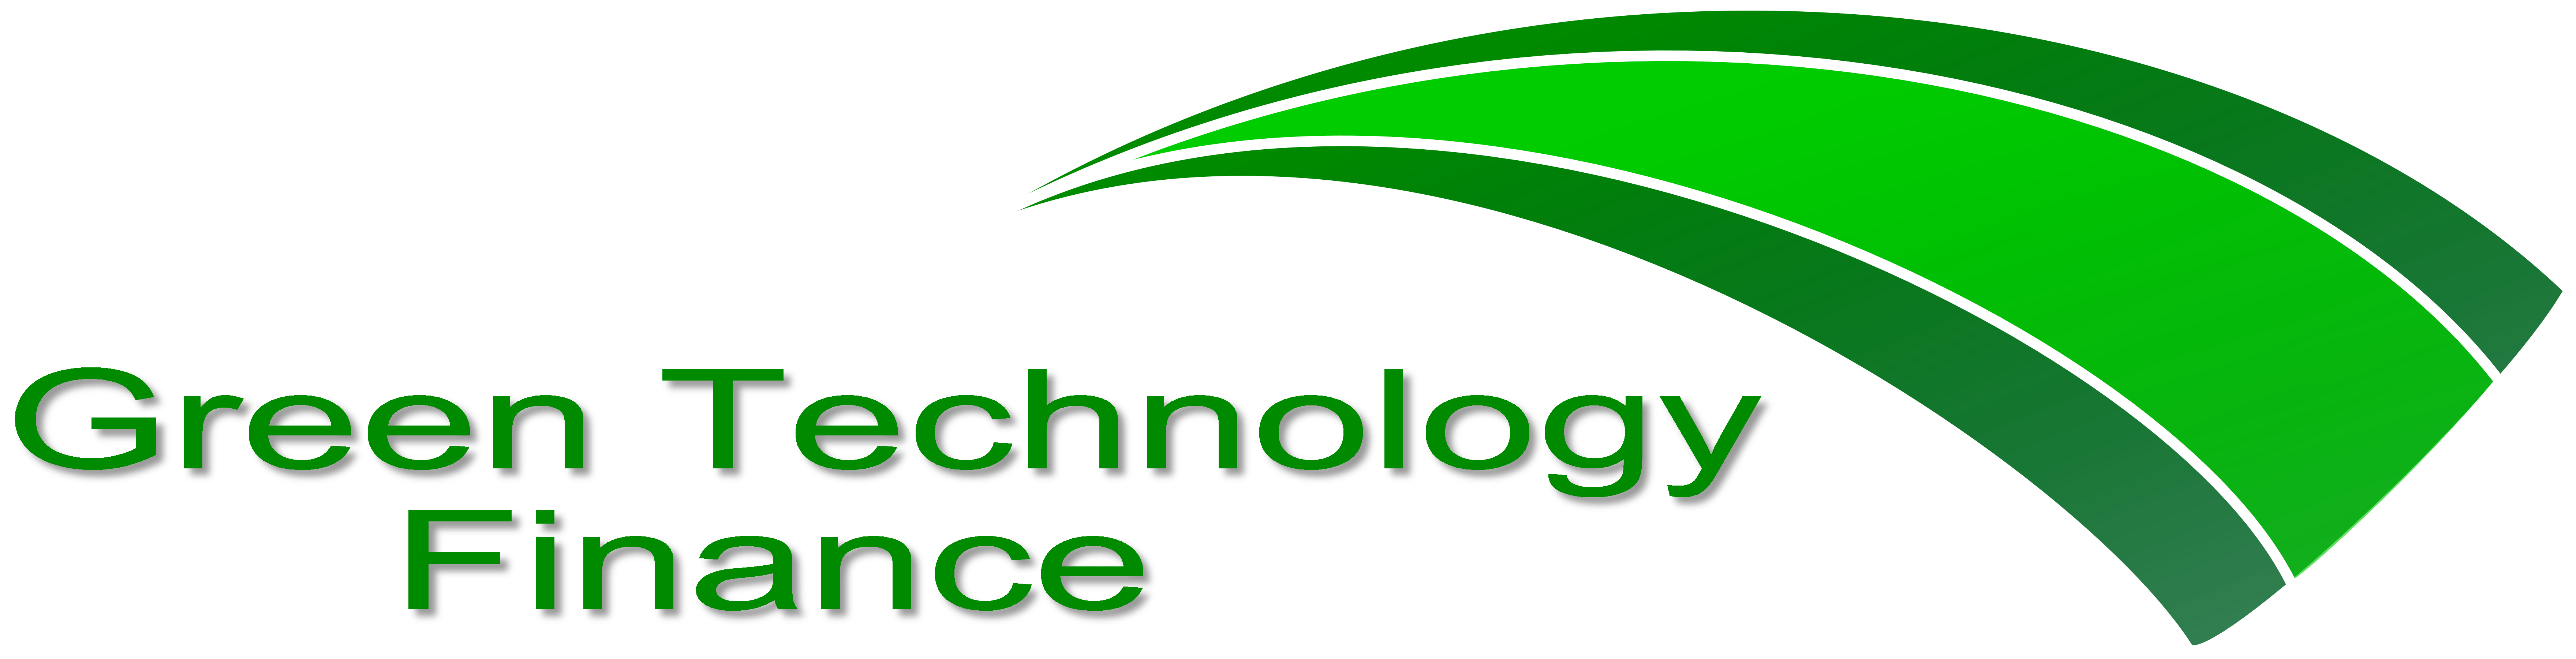 Green Technology Logo - About Us - Green Technology Finance